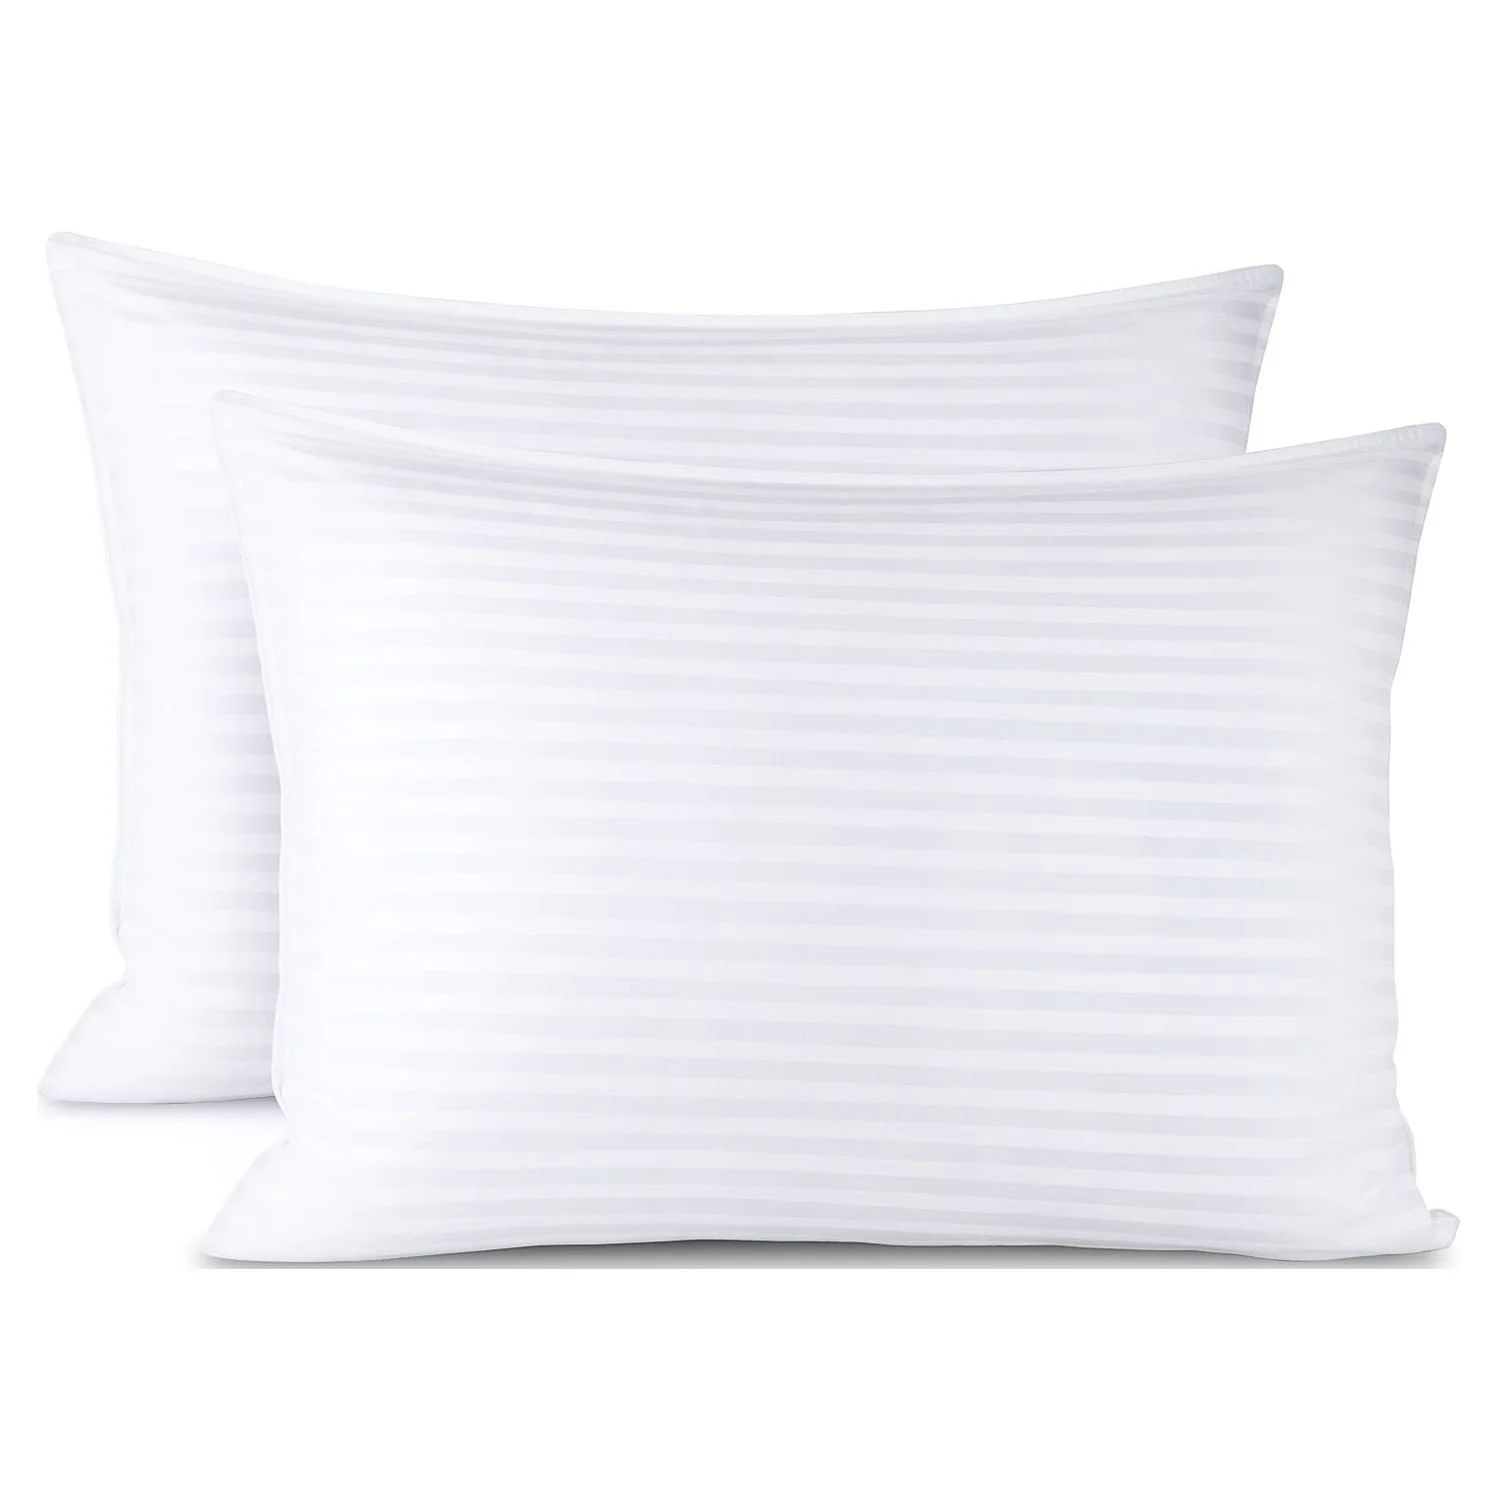 Nestl Bed Pillow, Pillows for Bed, Down Alternative Gel Cooling Queen Size Pillows 20" x 28", 2 P... | Walmart (US)